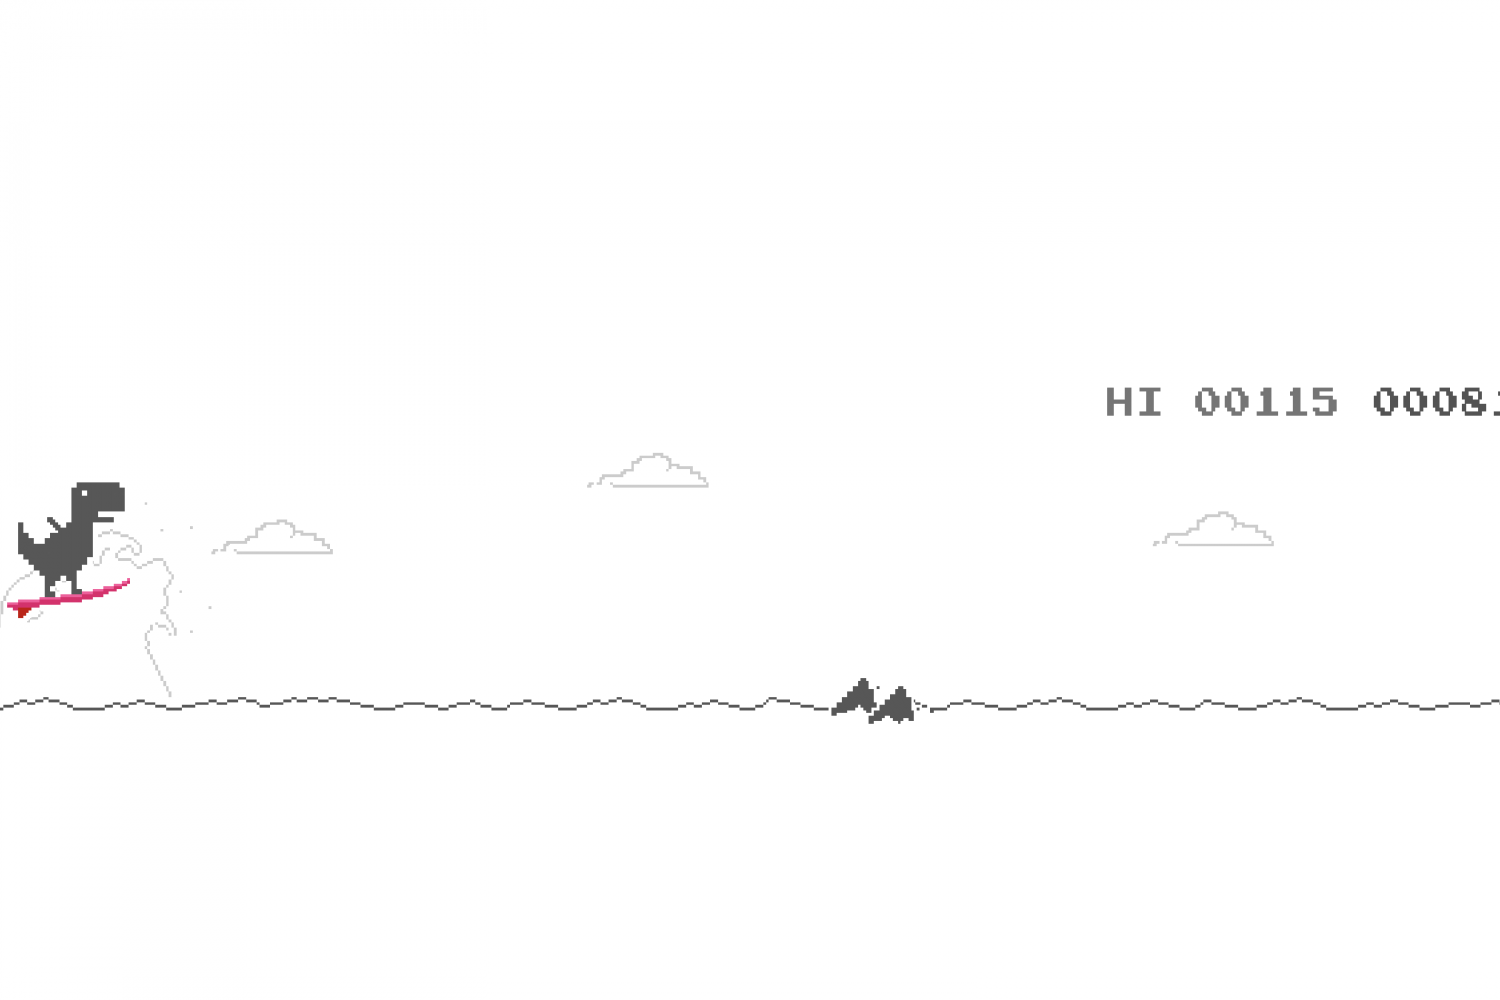 A Mac screenshot of Olympic mode in Google Chrome's hidden dinosaur jumping game